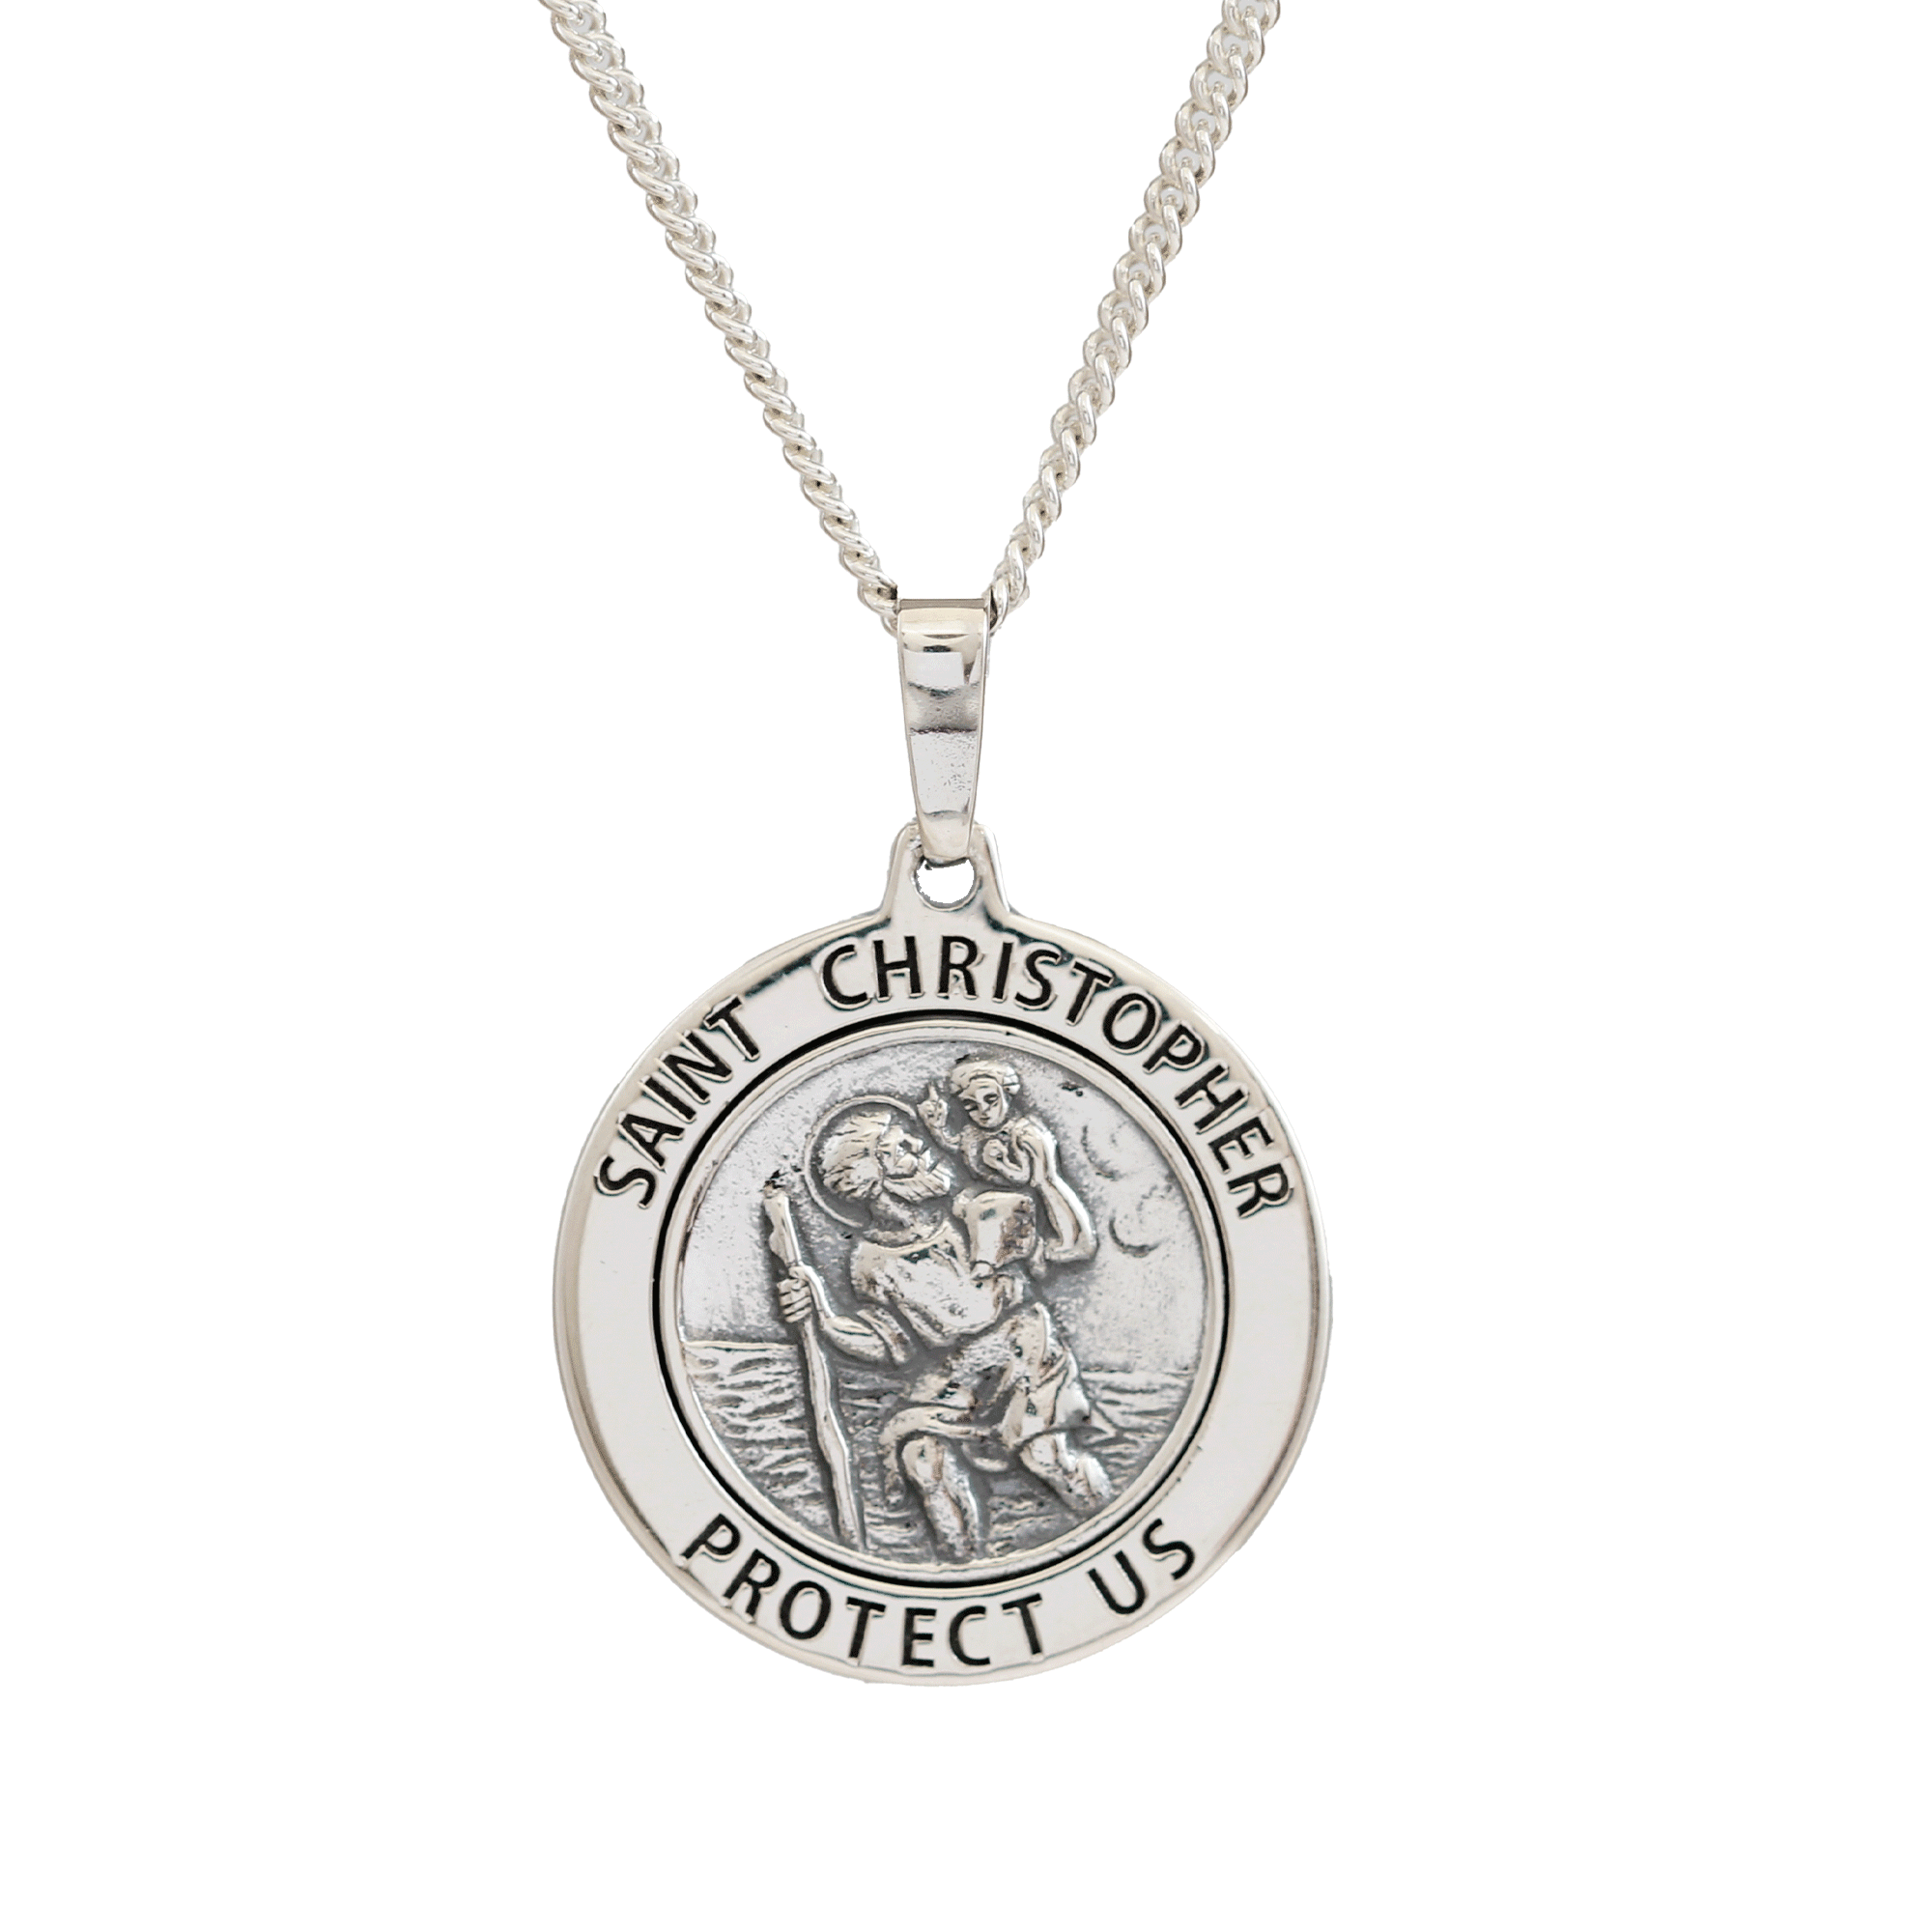 Saint Christopher Protect Us Round Border Oxidised Necklace